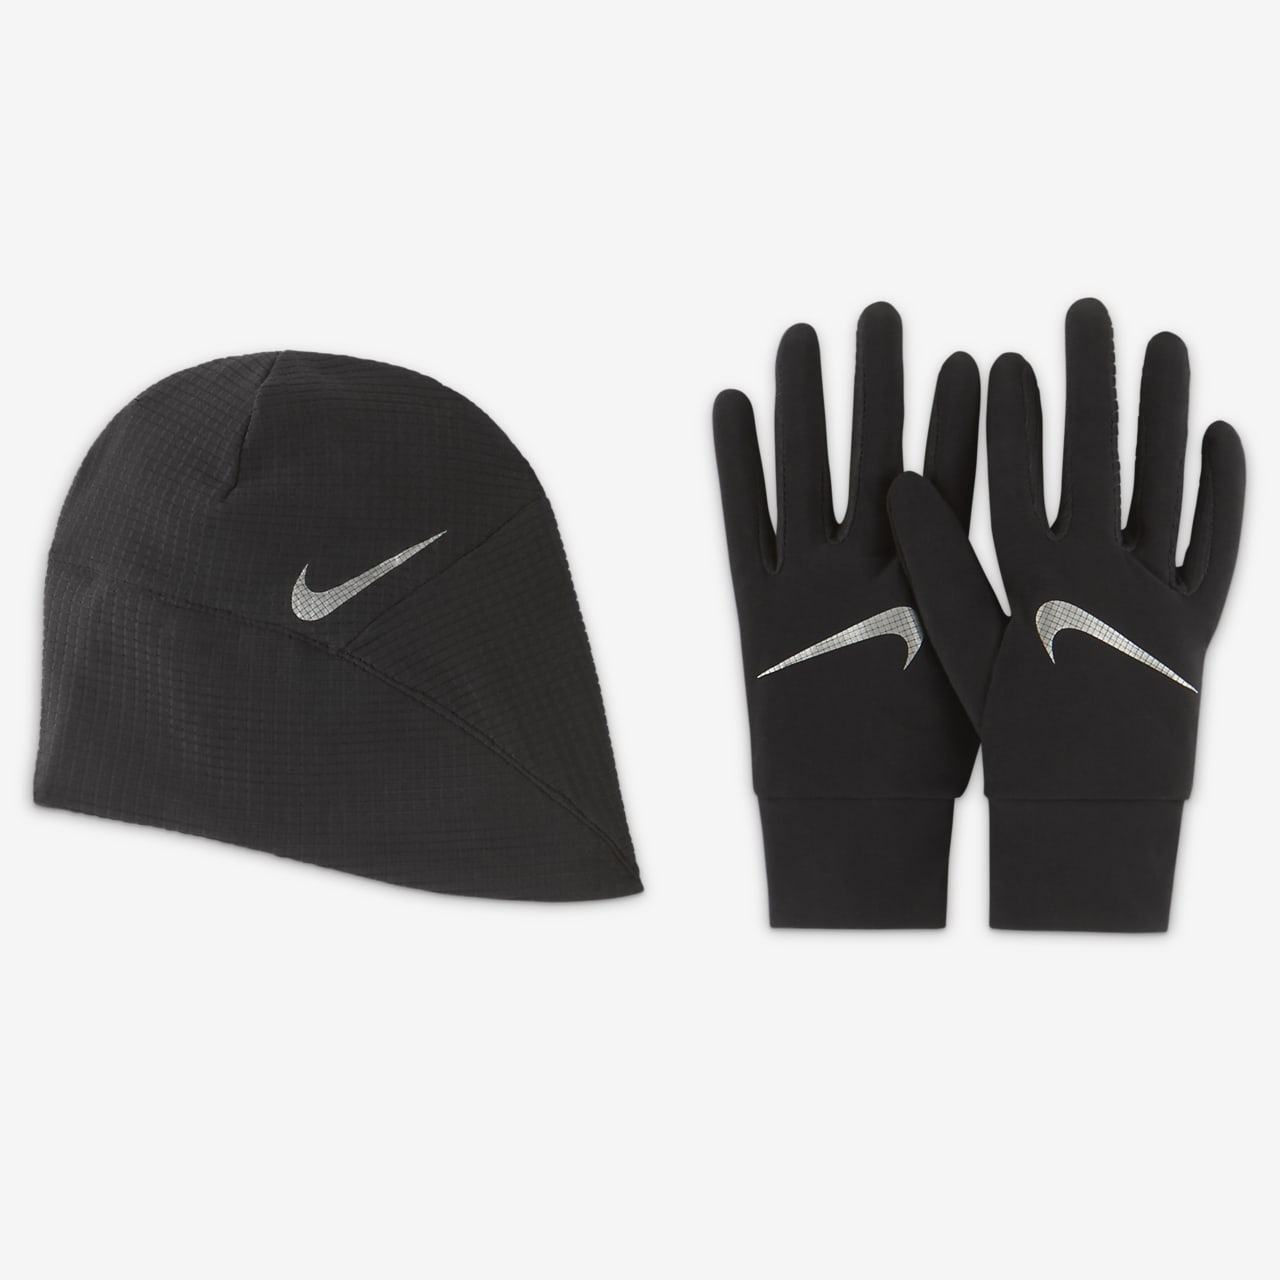 Running Hat and Glove Set. Nike.com